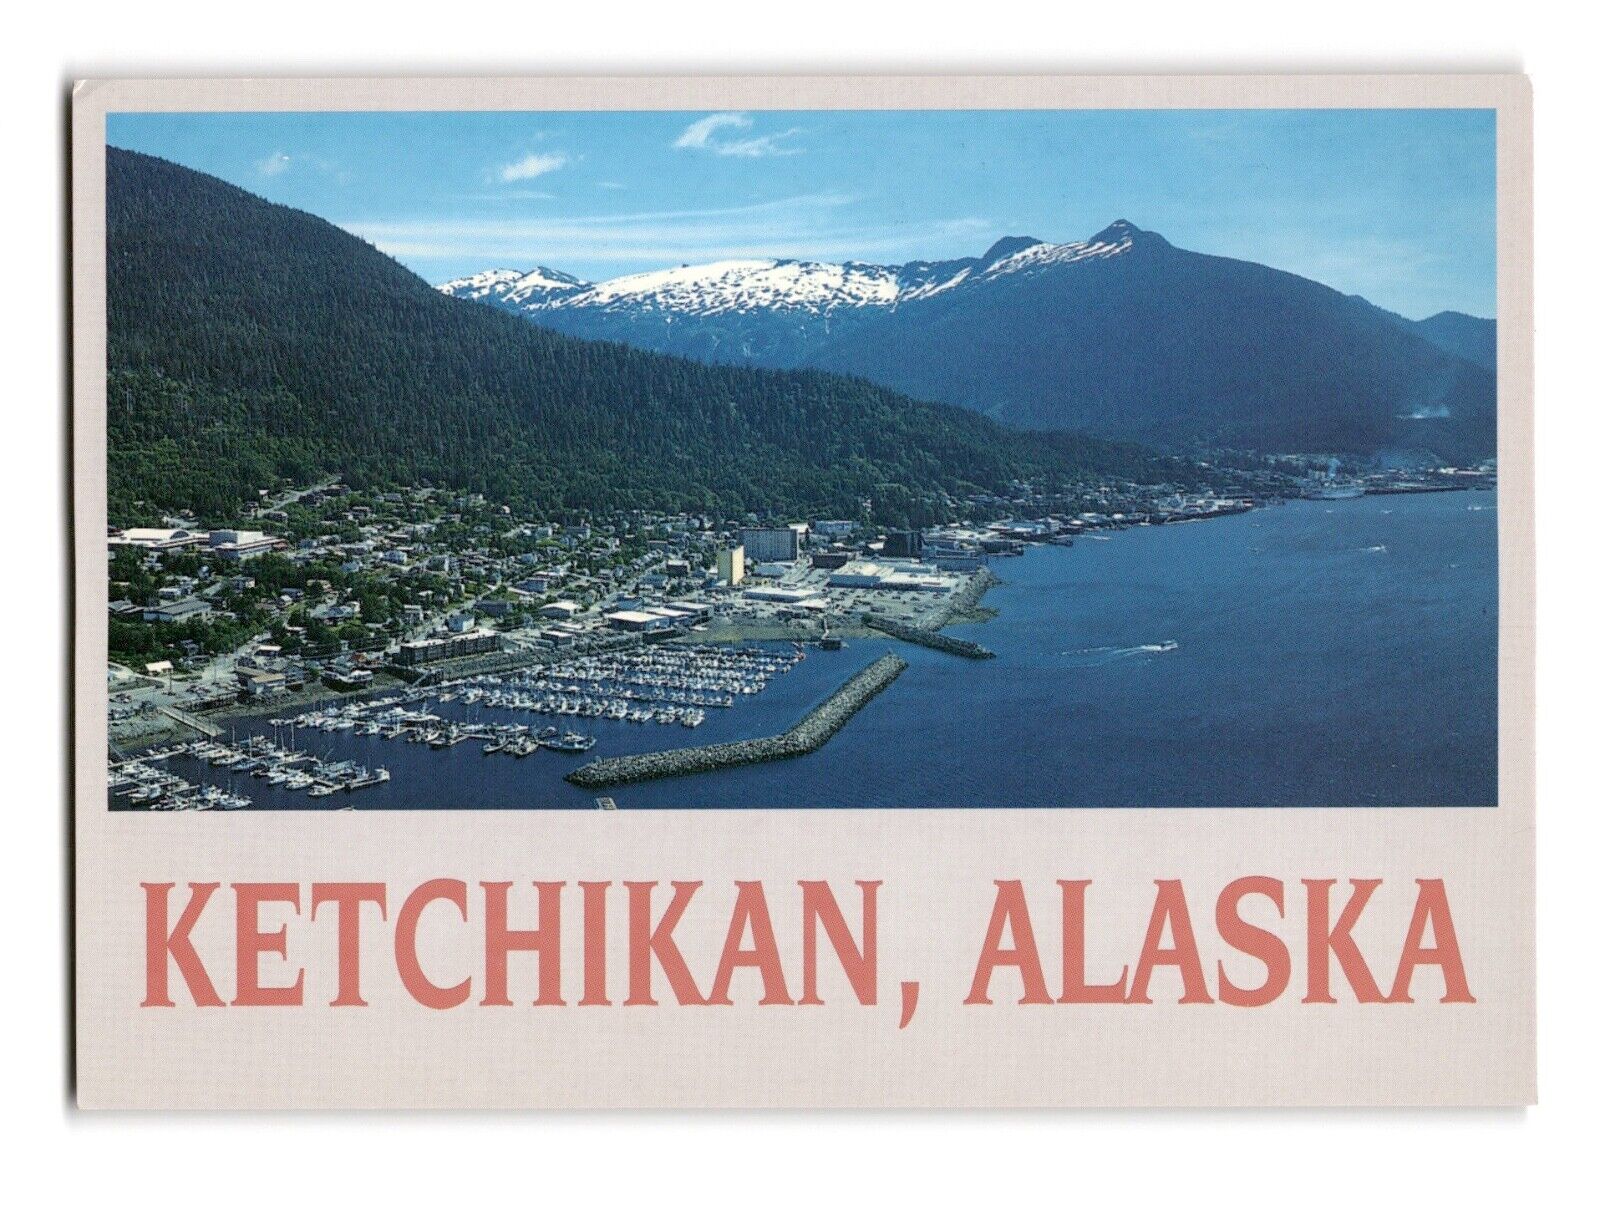 Ketchikan Alaska Aerial View Postcard - Southeastern Marina Landscape Vintage